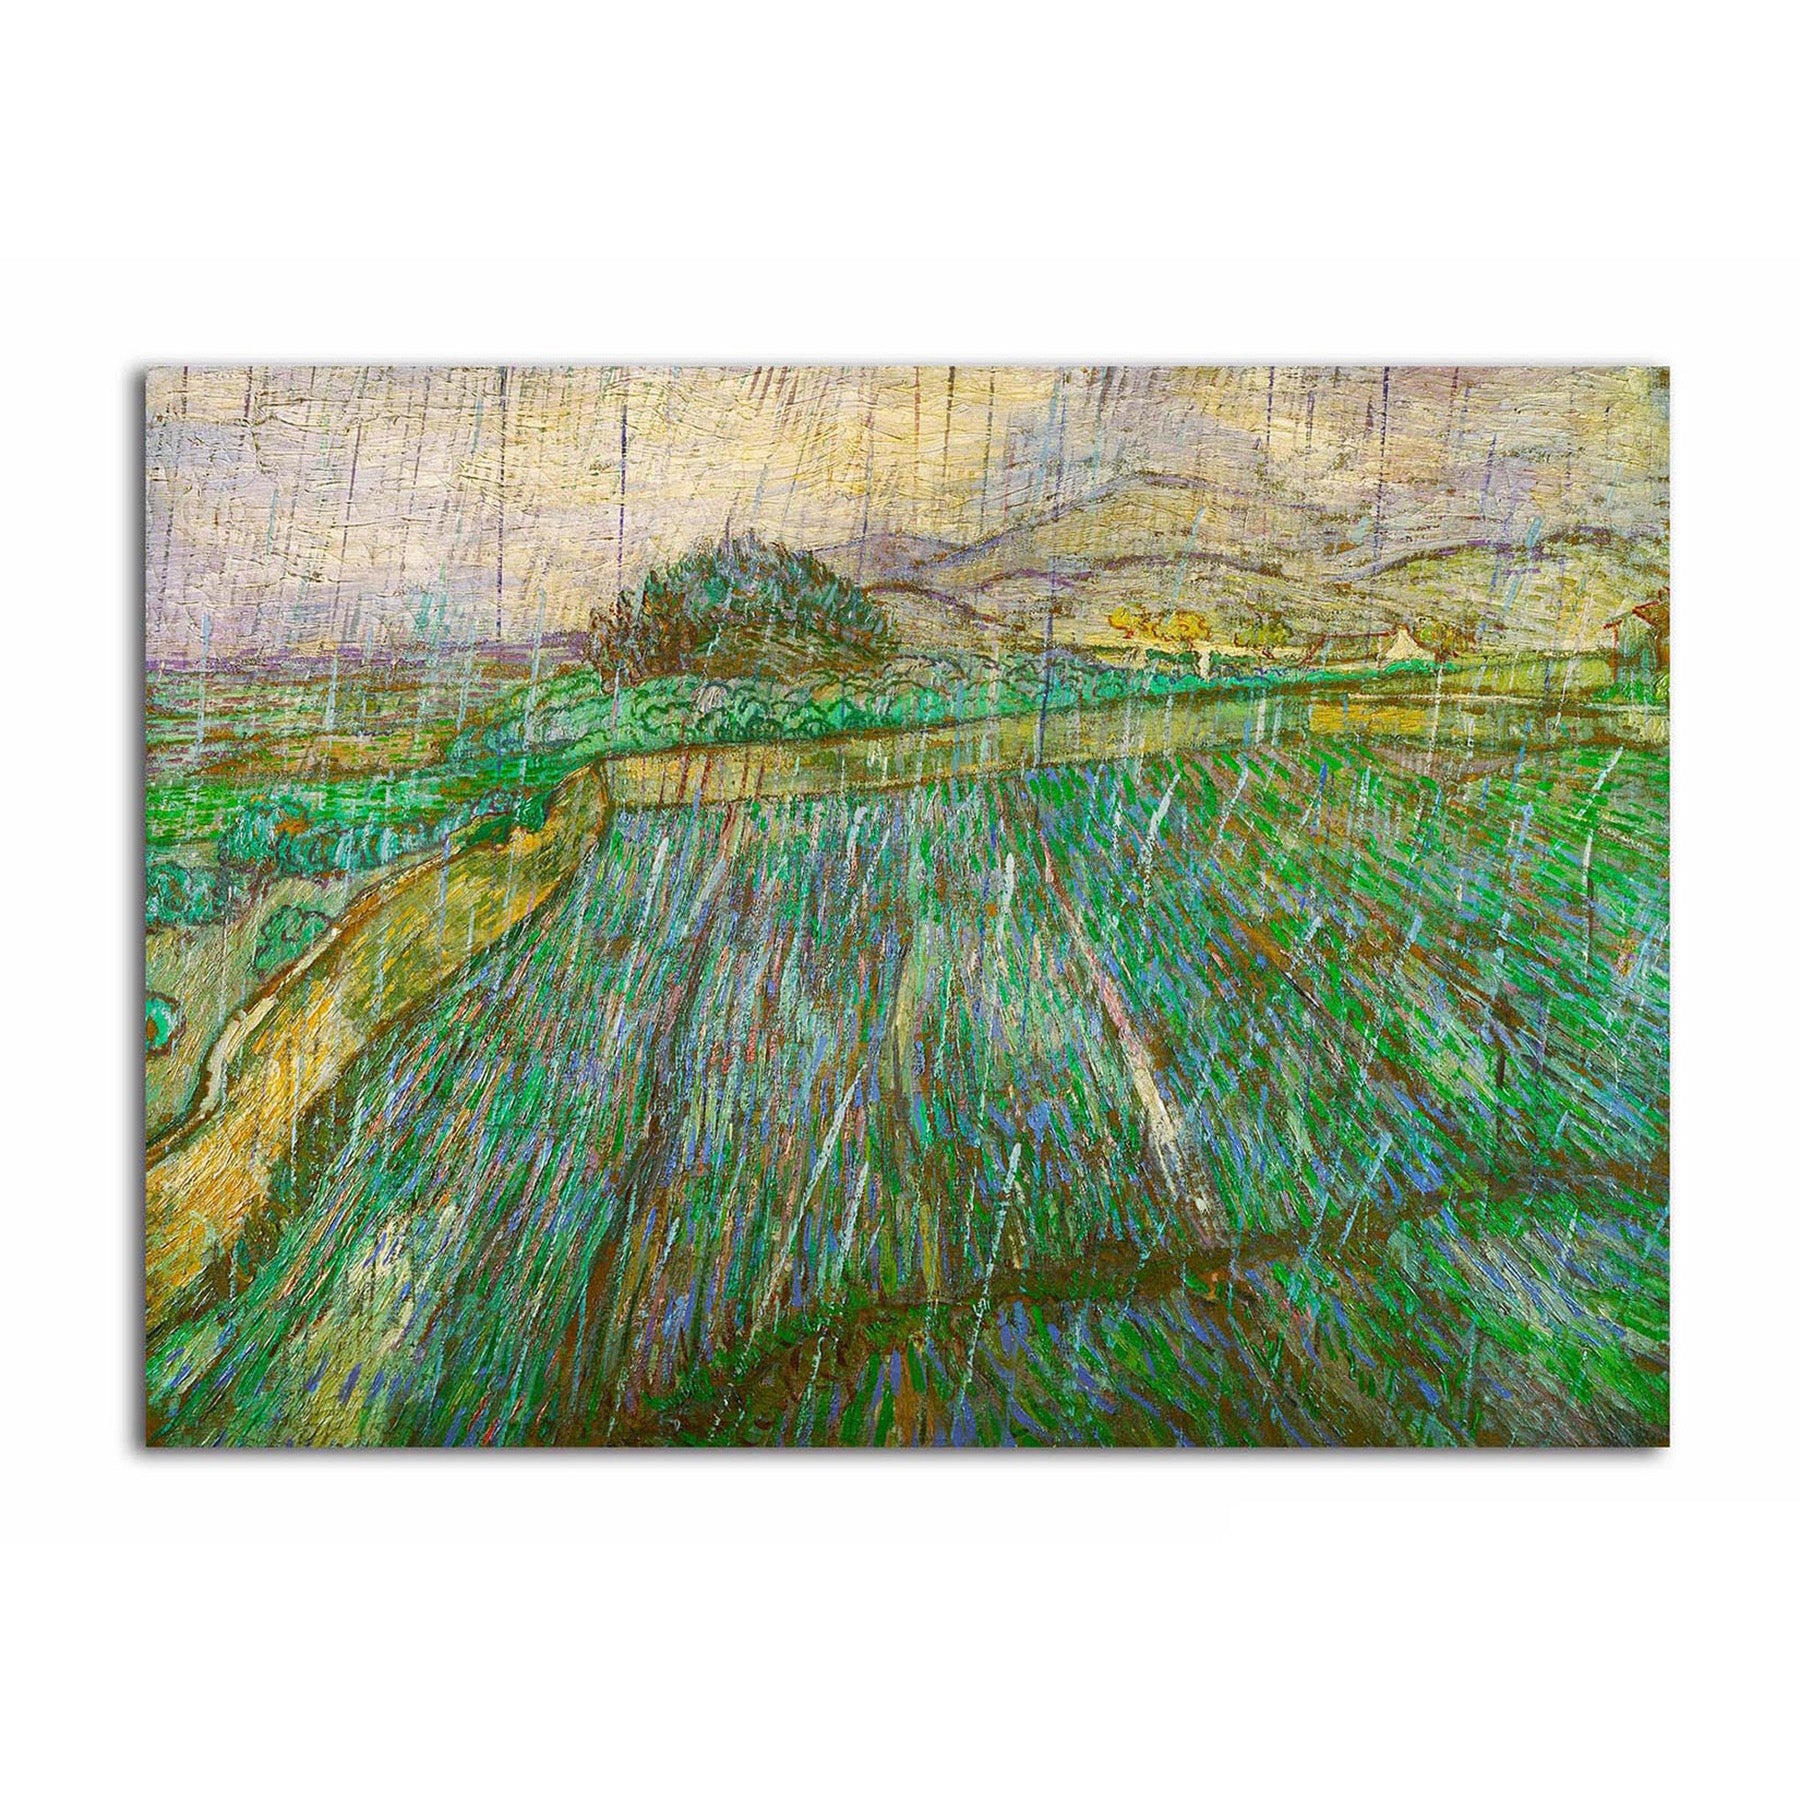 Enclosed Wheat Field in the Rain